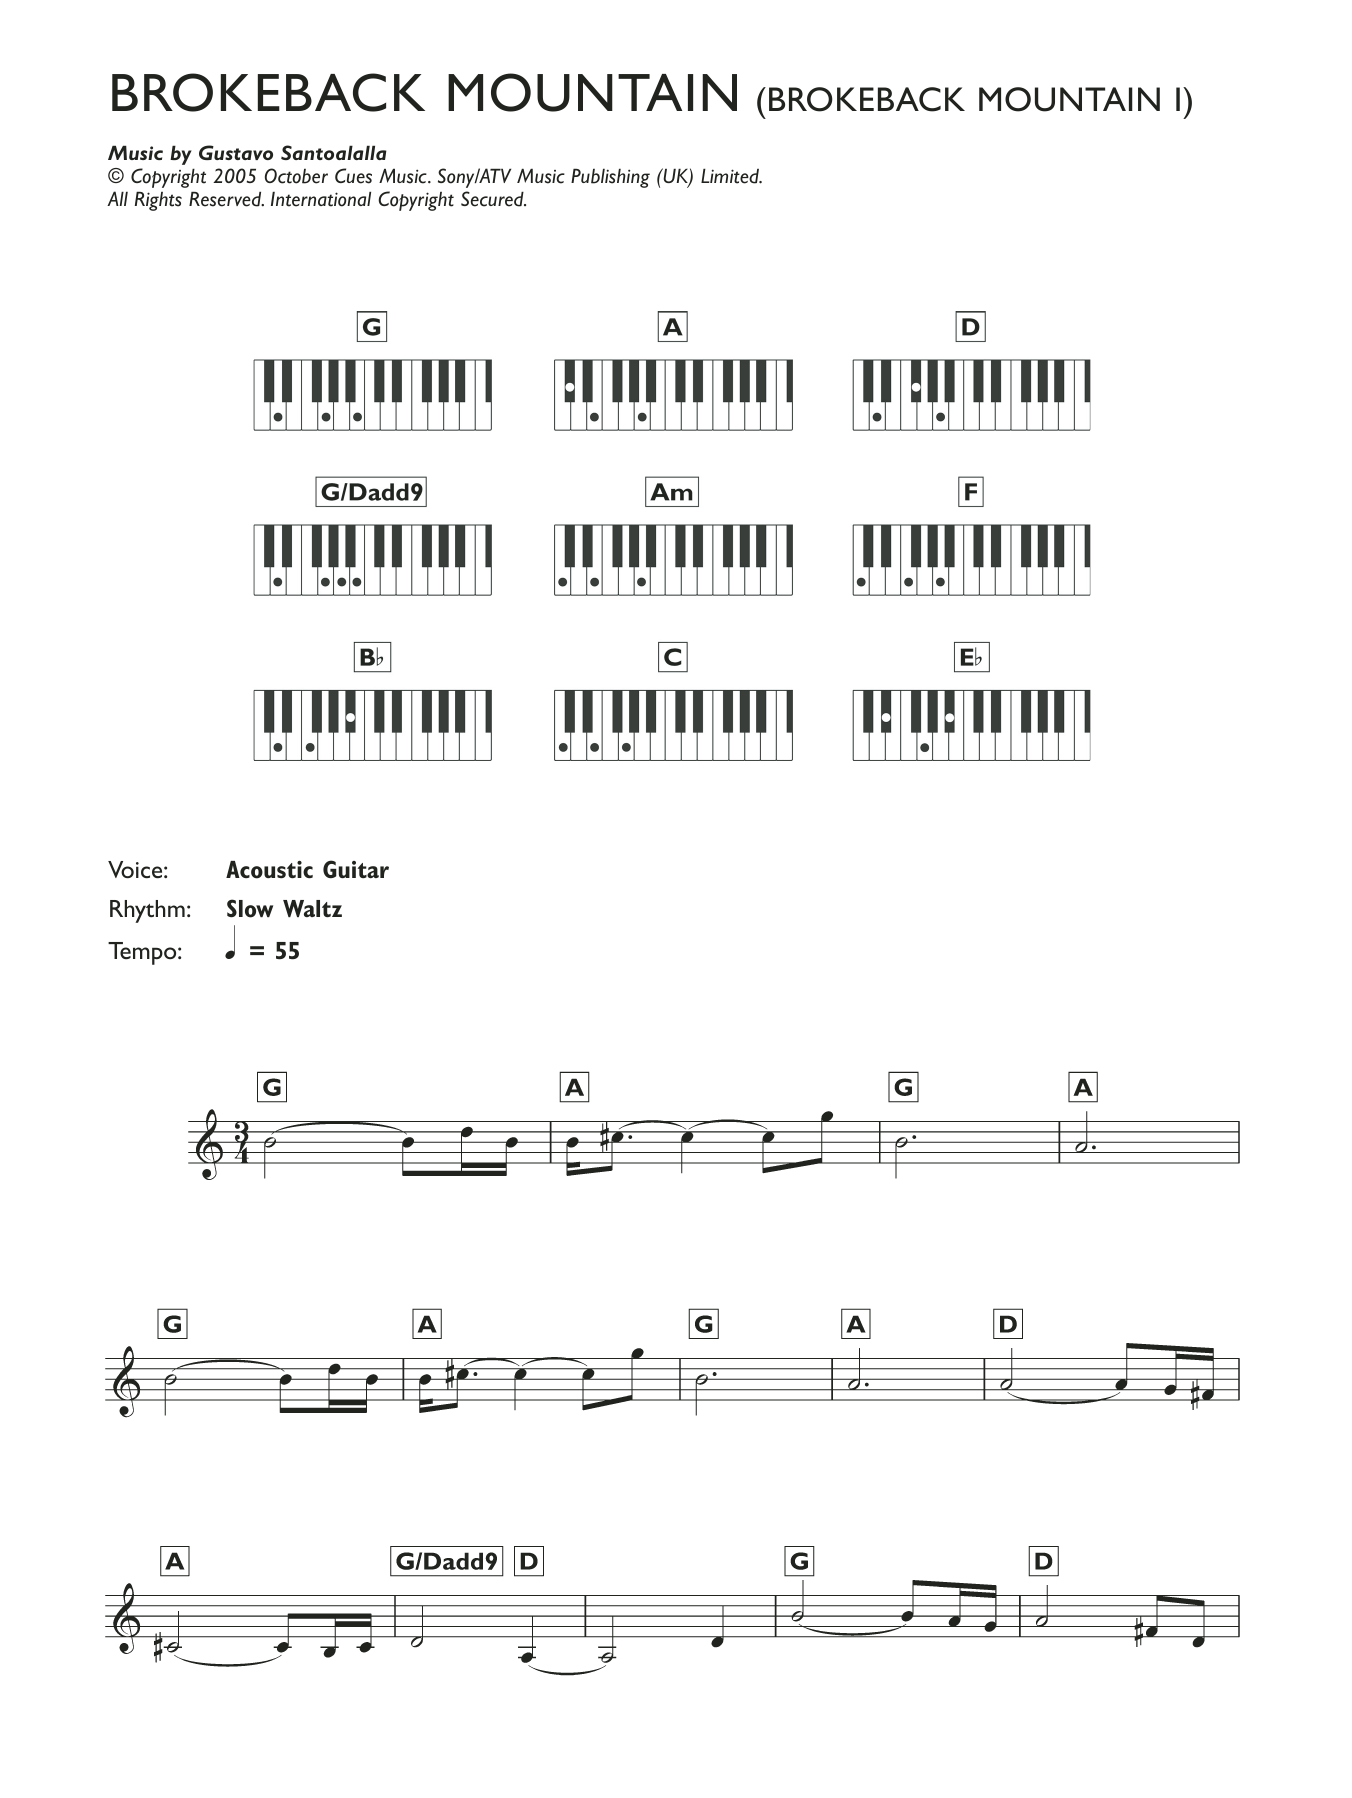 Gustavo Santaolalla Theme from Brokeback Mountain Sheet Music Notes & Chords for Keyboard - Download or Print PDF